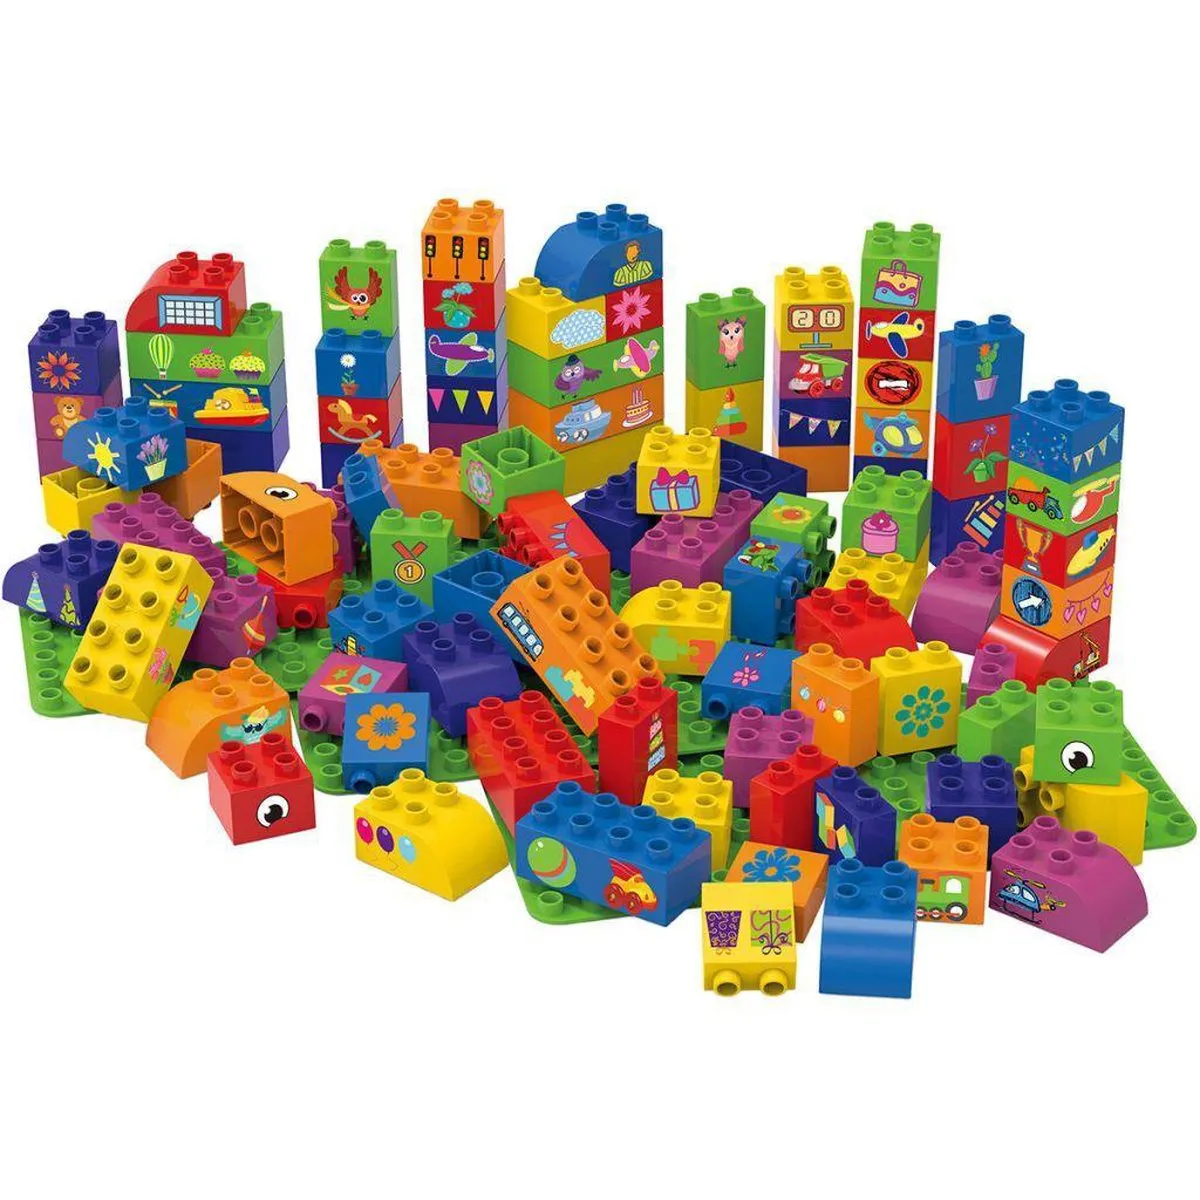 BioBuddi Big Blocks - Bouwblokken Speelgoed - Bouwset-150 blokken- speelgoed